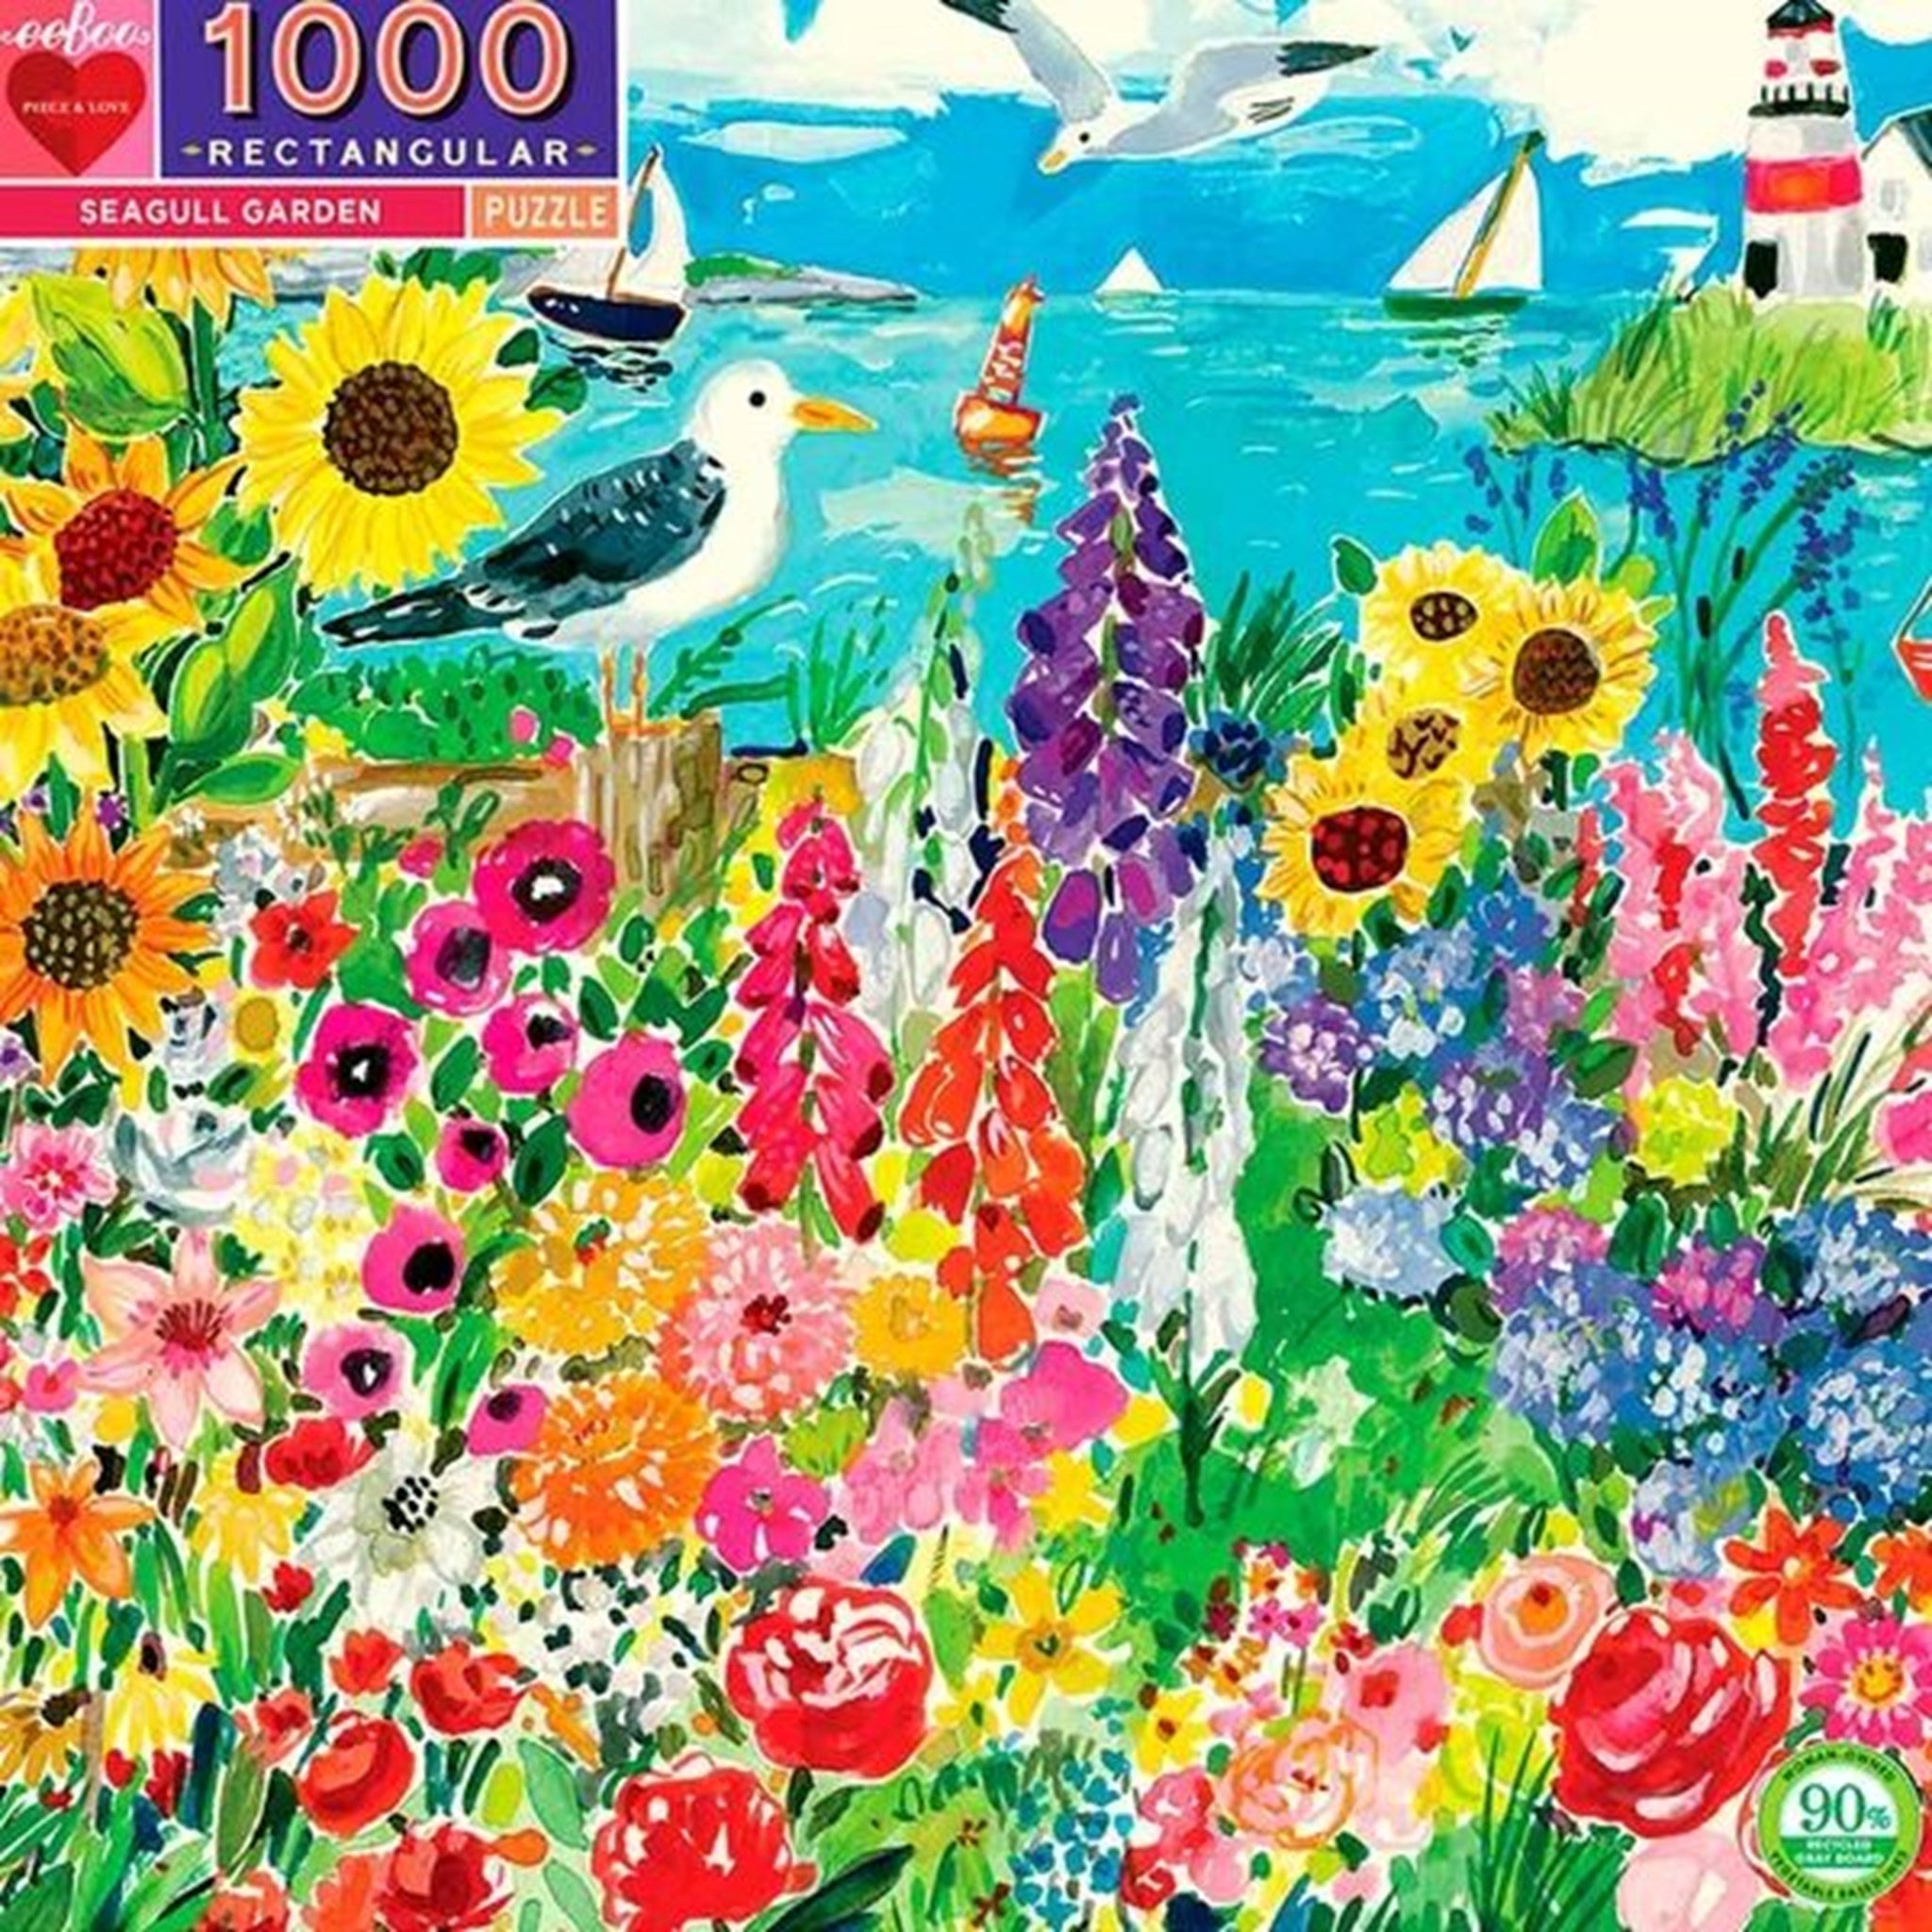 Eeboo Puzzle 1000 Pieces - Seagull